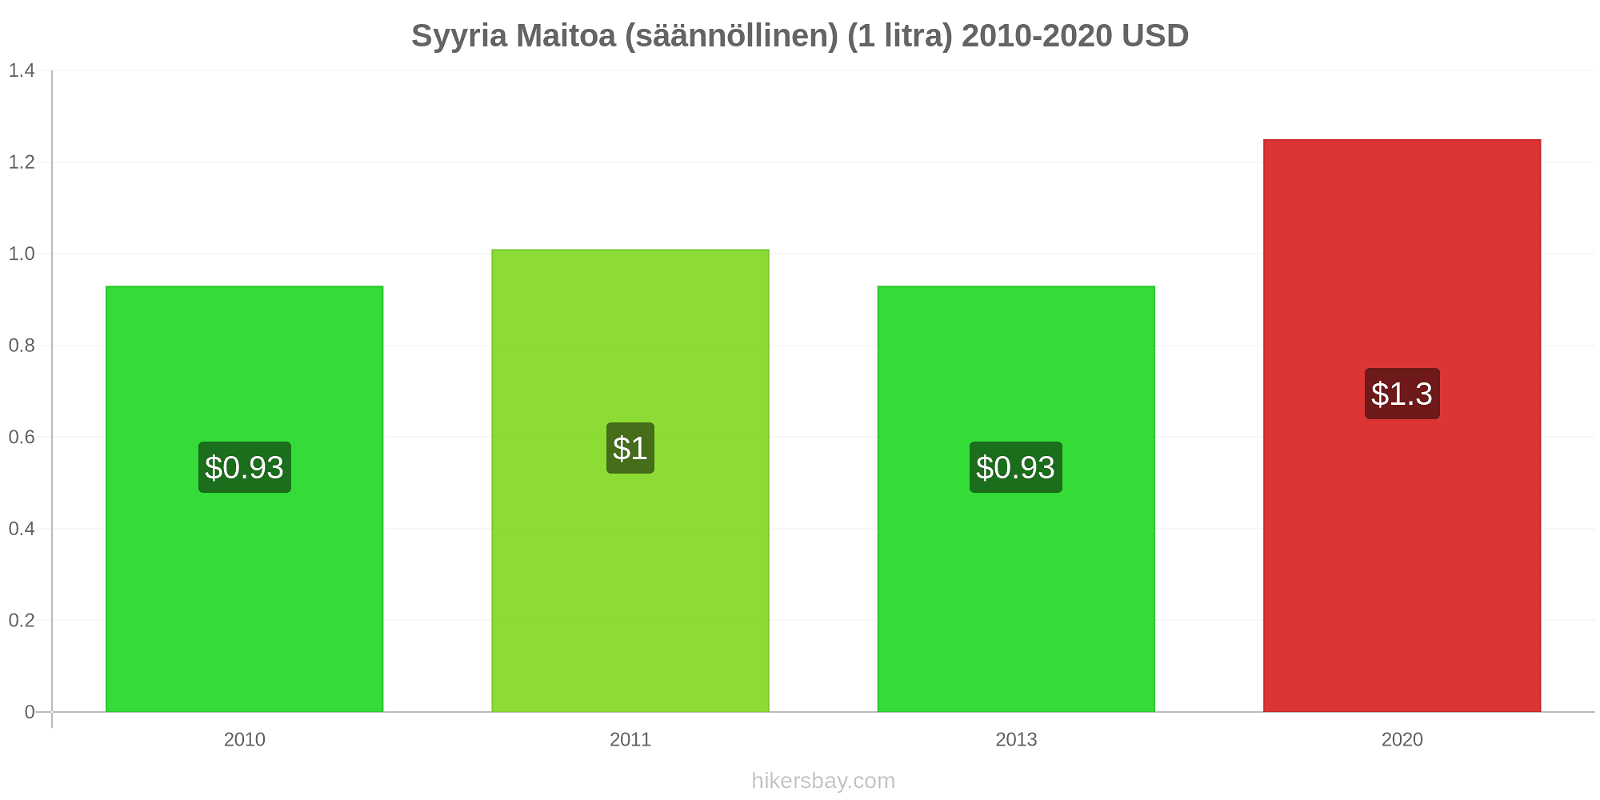 Syyria hintojen muutokset Maitoa (säännöllinen) (1 litra) hikersbay.com